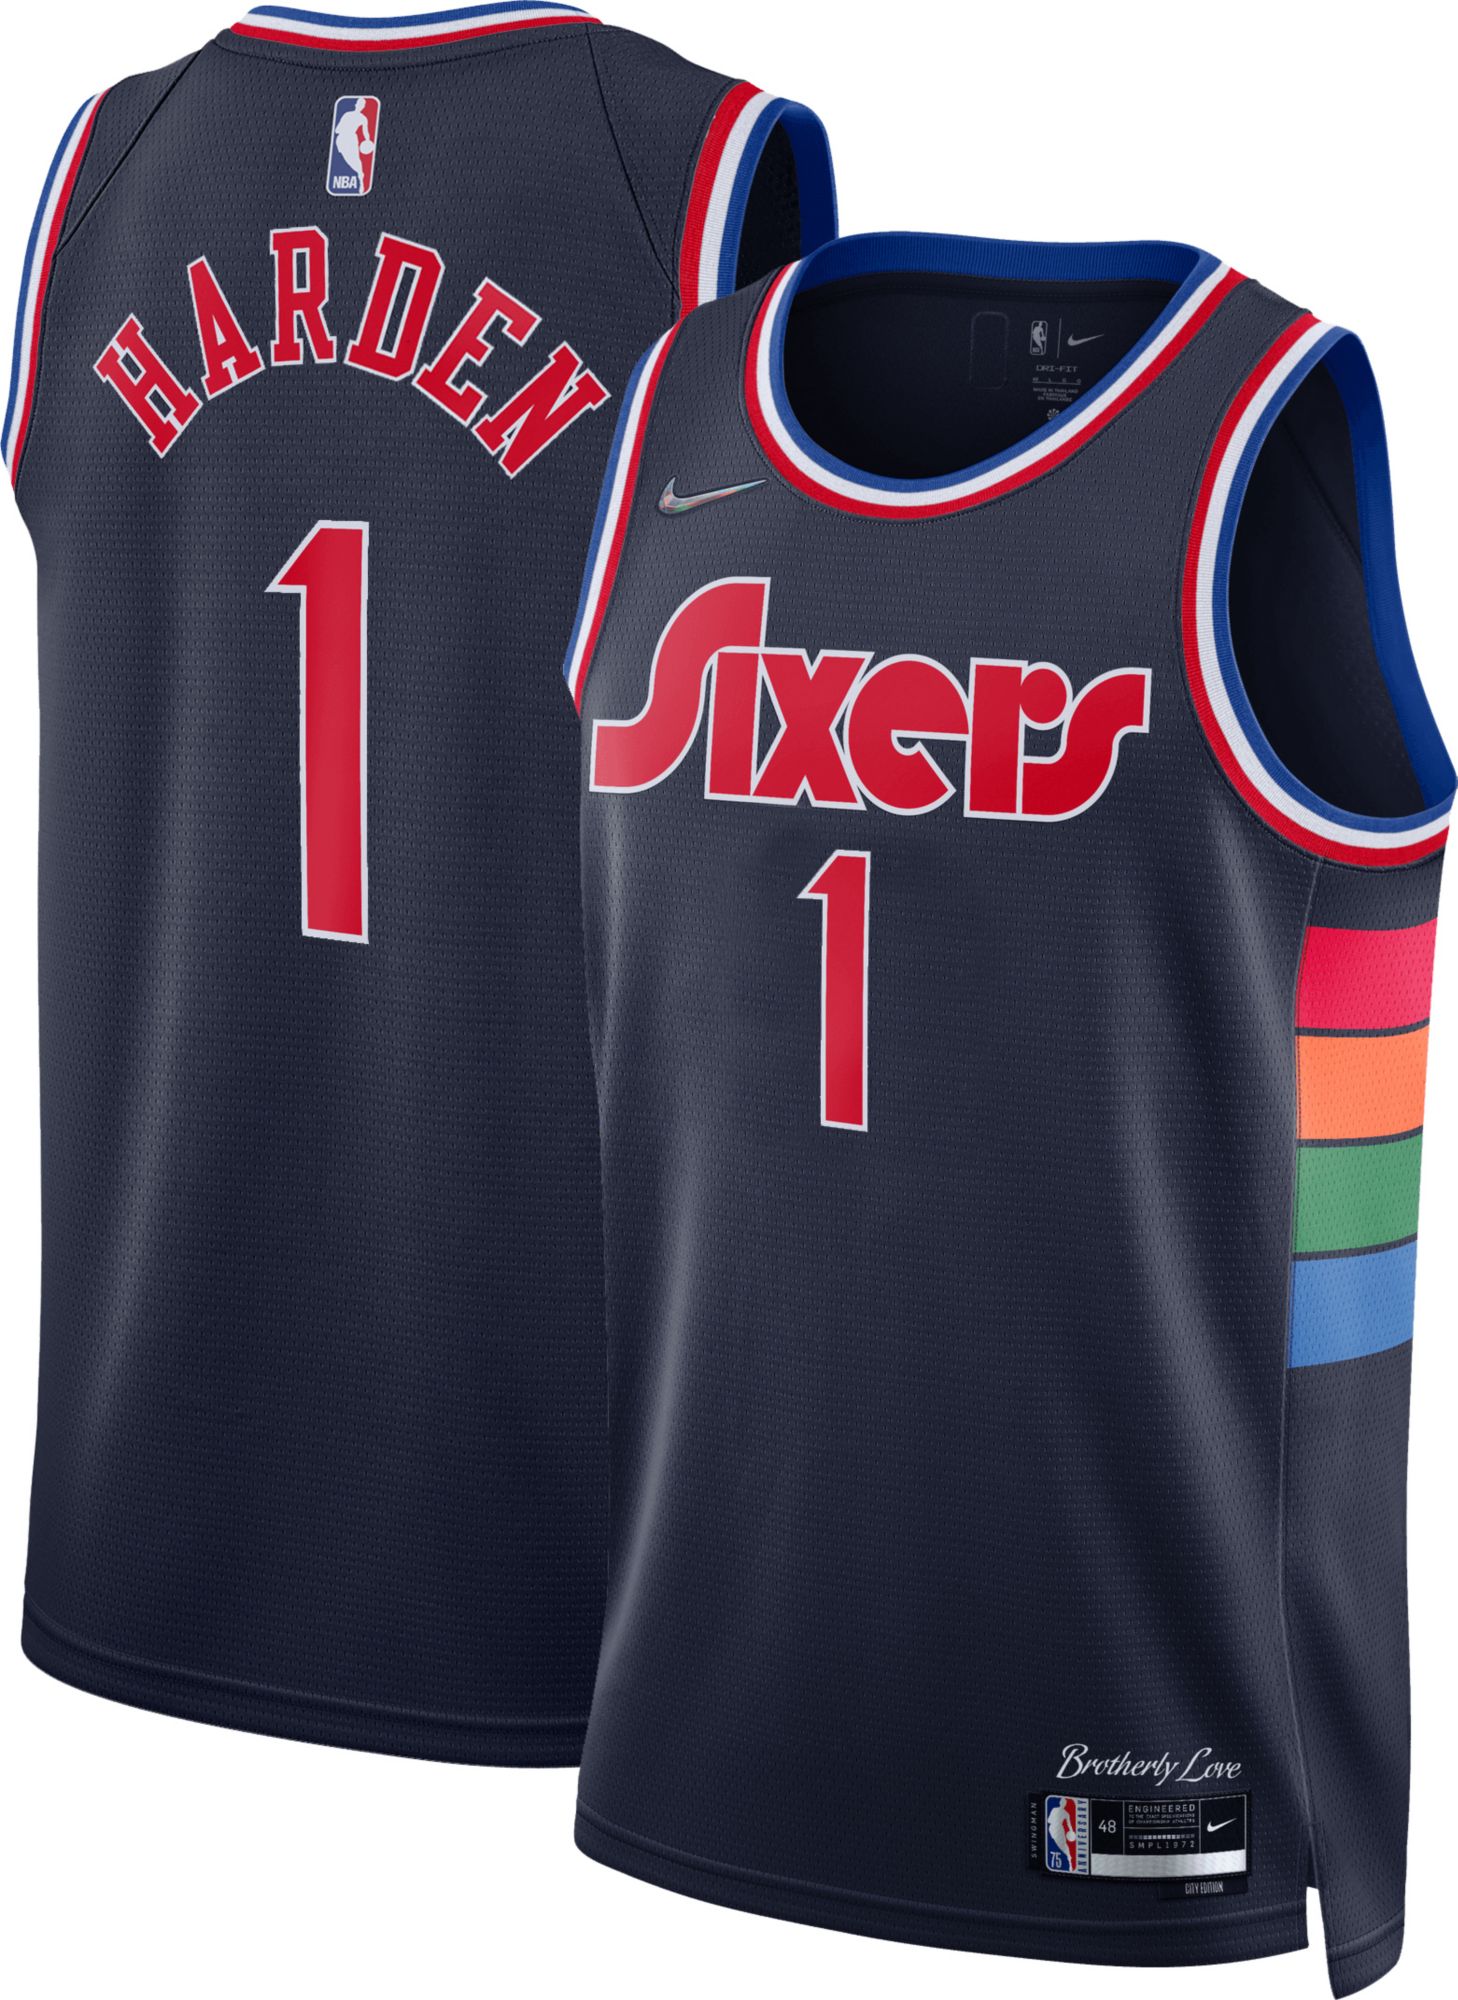 76ers city edition uniforms